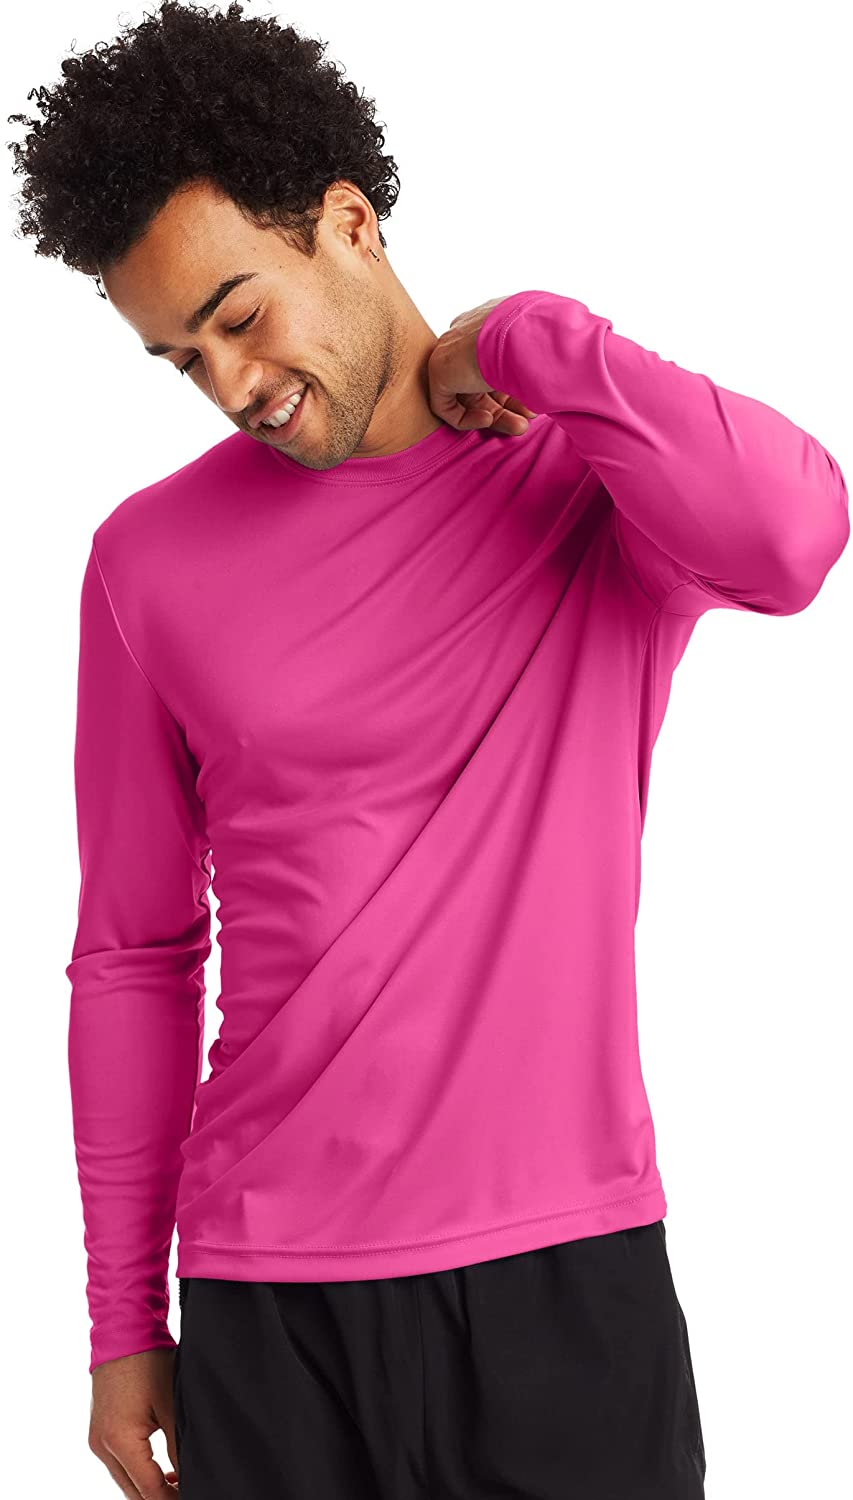 Hanes Men's Long Sleeve Cool Dri T-Shirt UPF 50+ (Pack of 2)